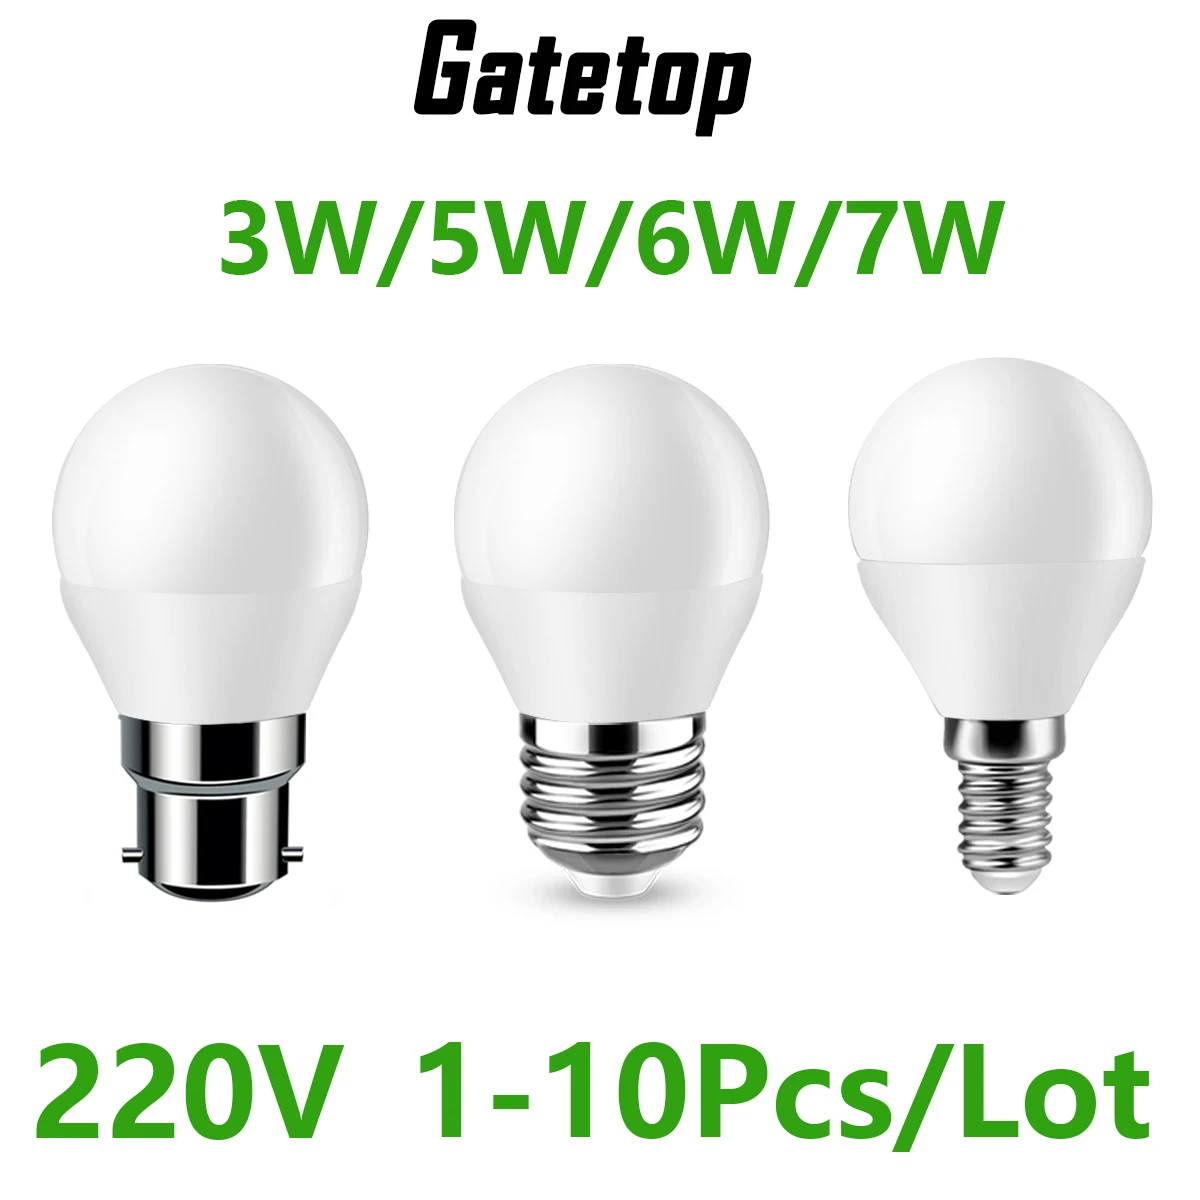 

1-10PCS LED Mini bulb G45 3W-7W E14 E27 B22 AC220V High lumen no strobe warm white light suitable for kitchen toilet down light